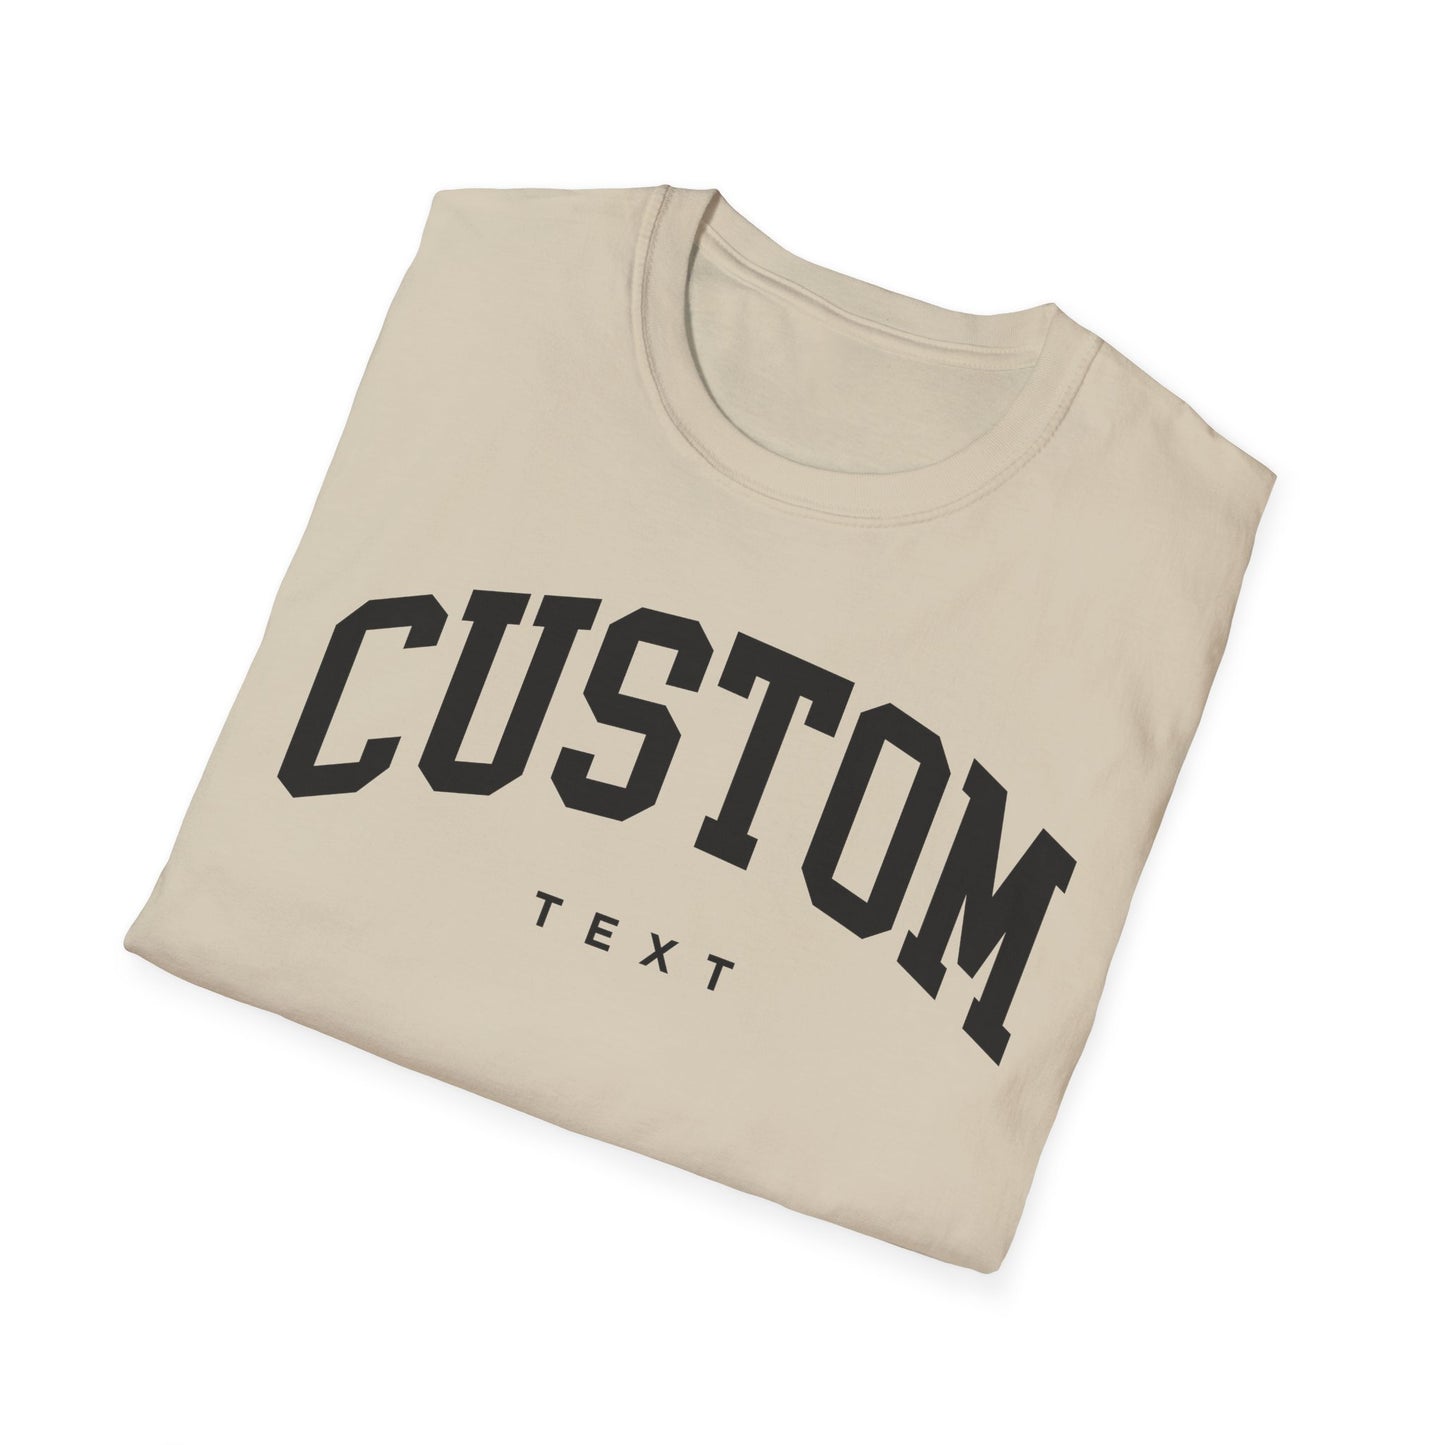 Custom Text Tee